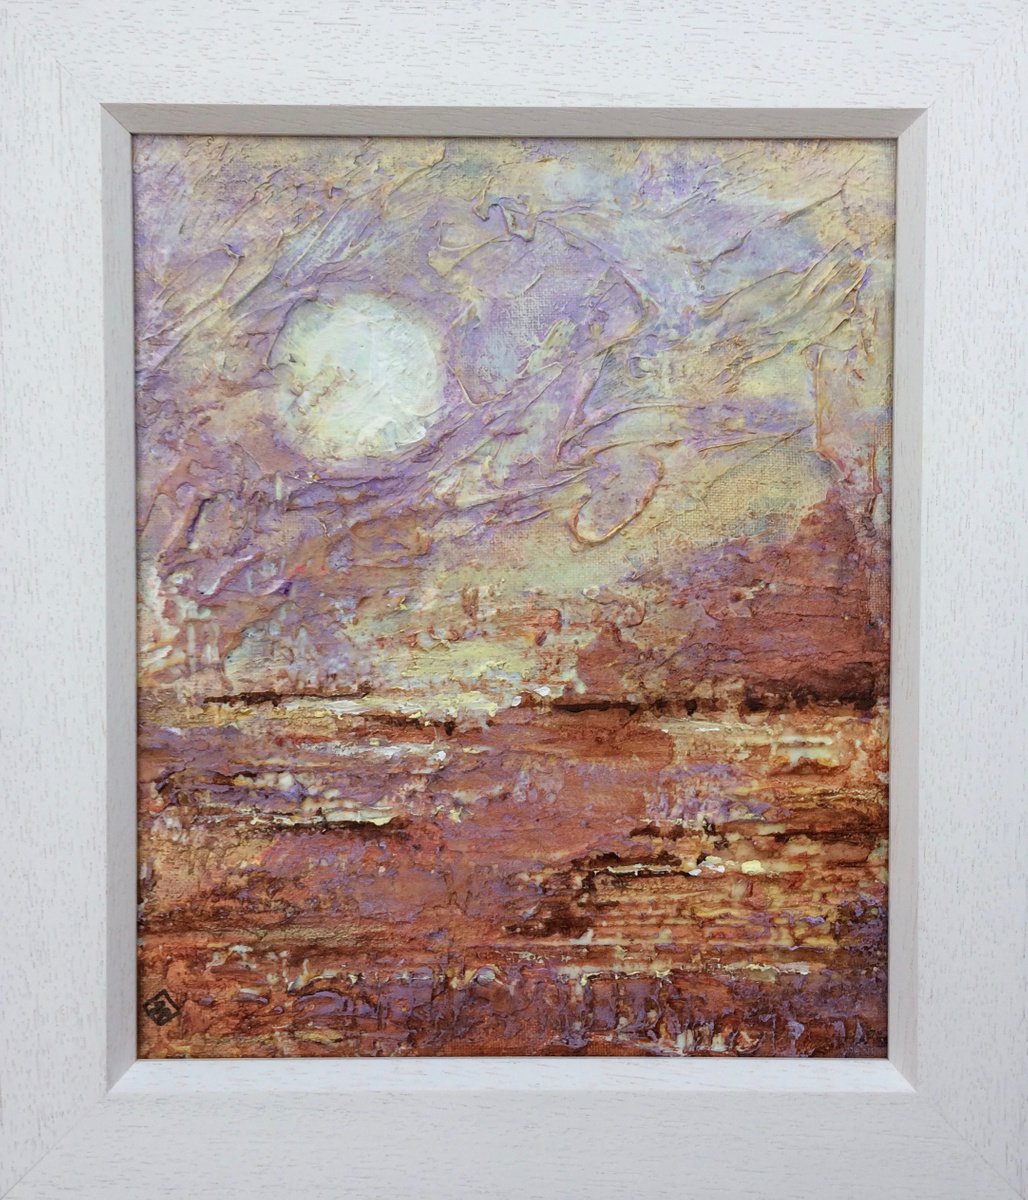 Pale Moon Rising - Framed painting by Lynn Presland